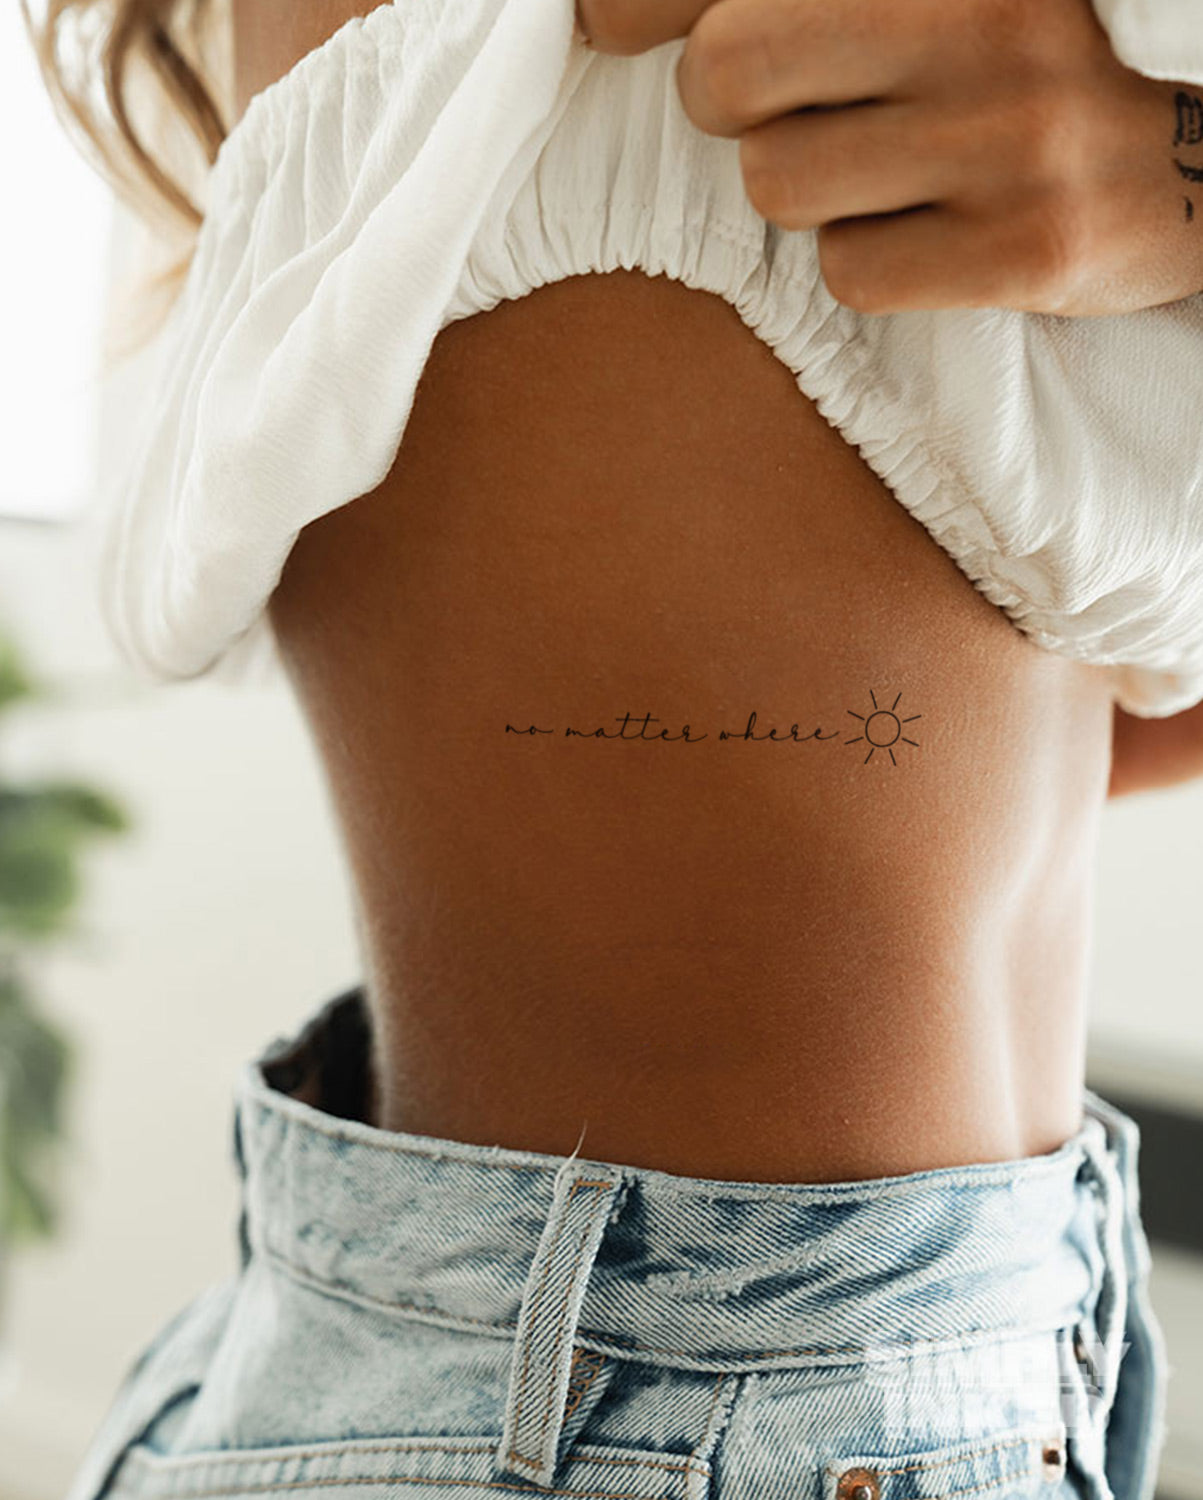 “no matter where” Tattoo